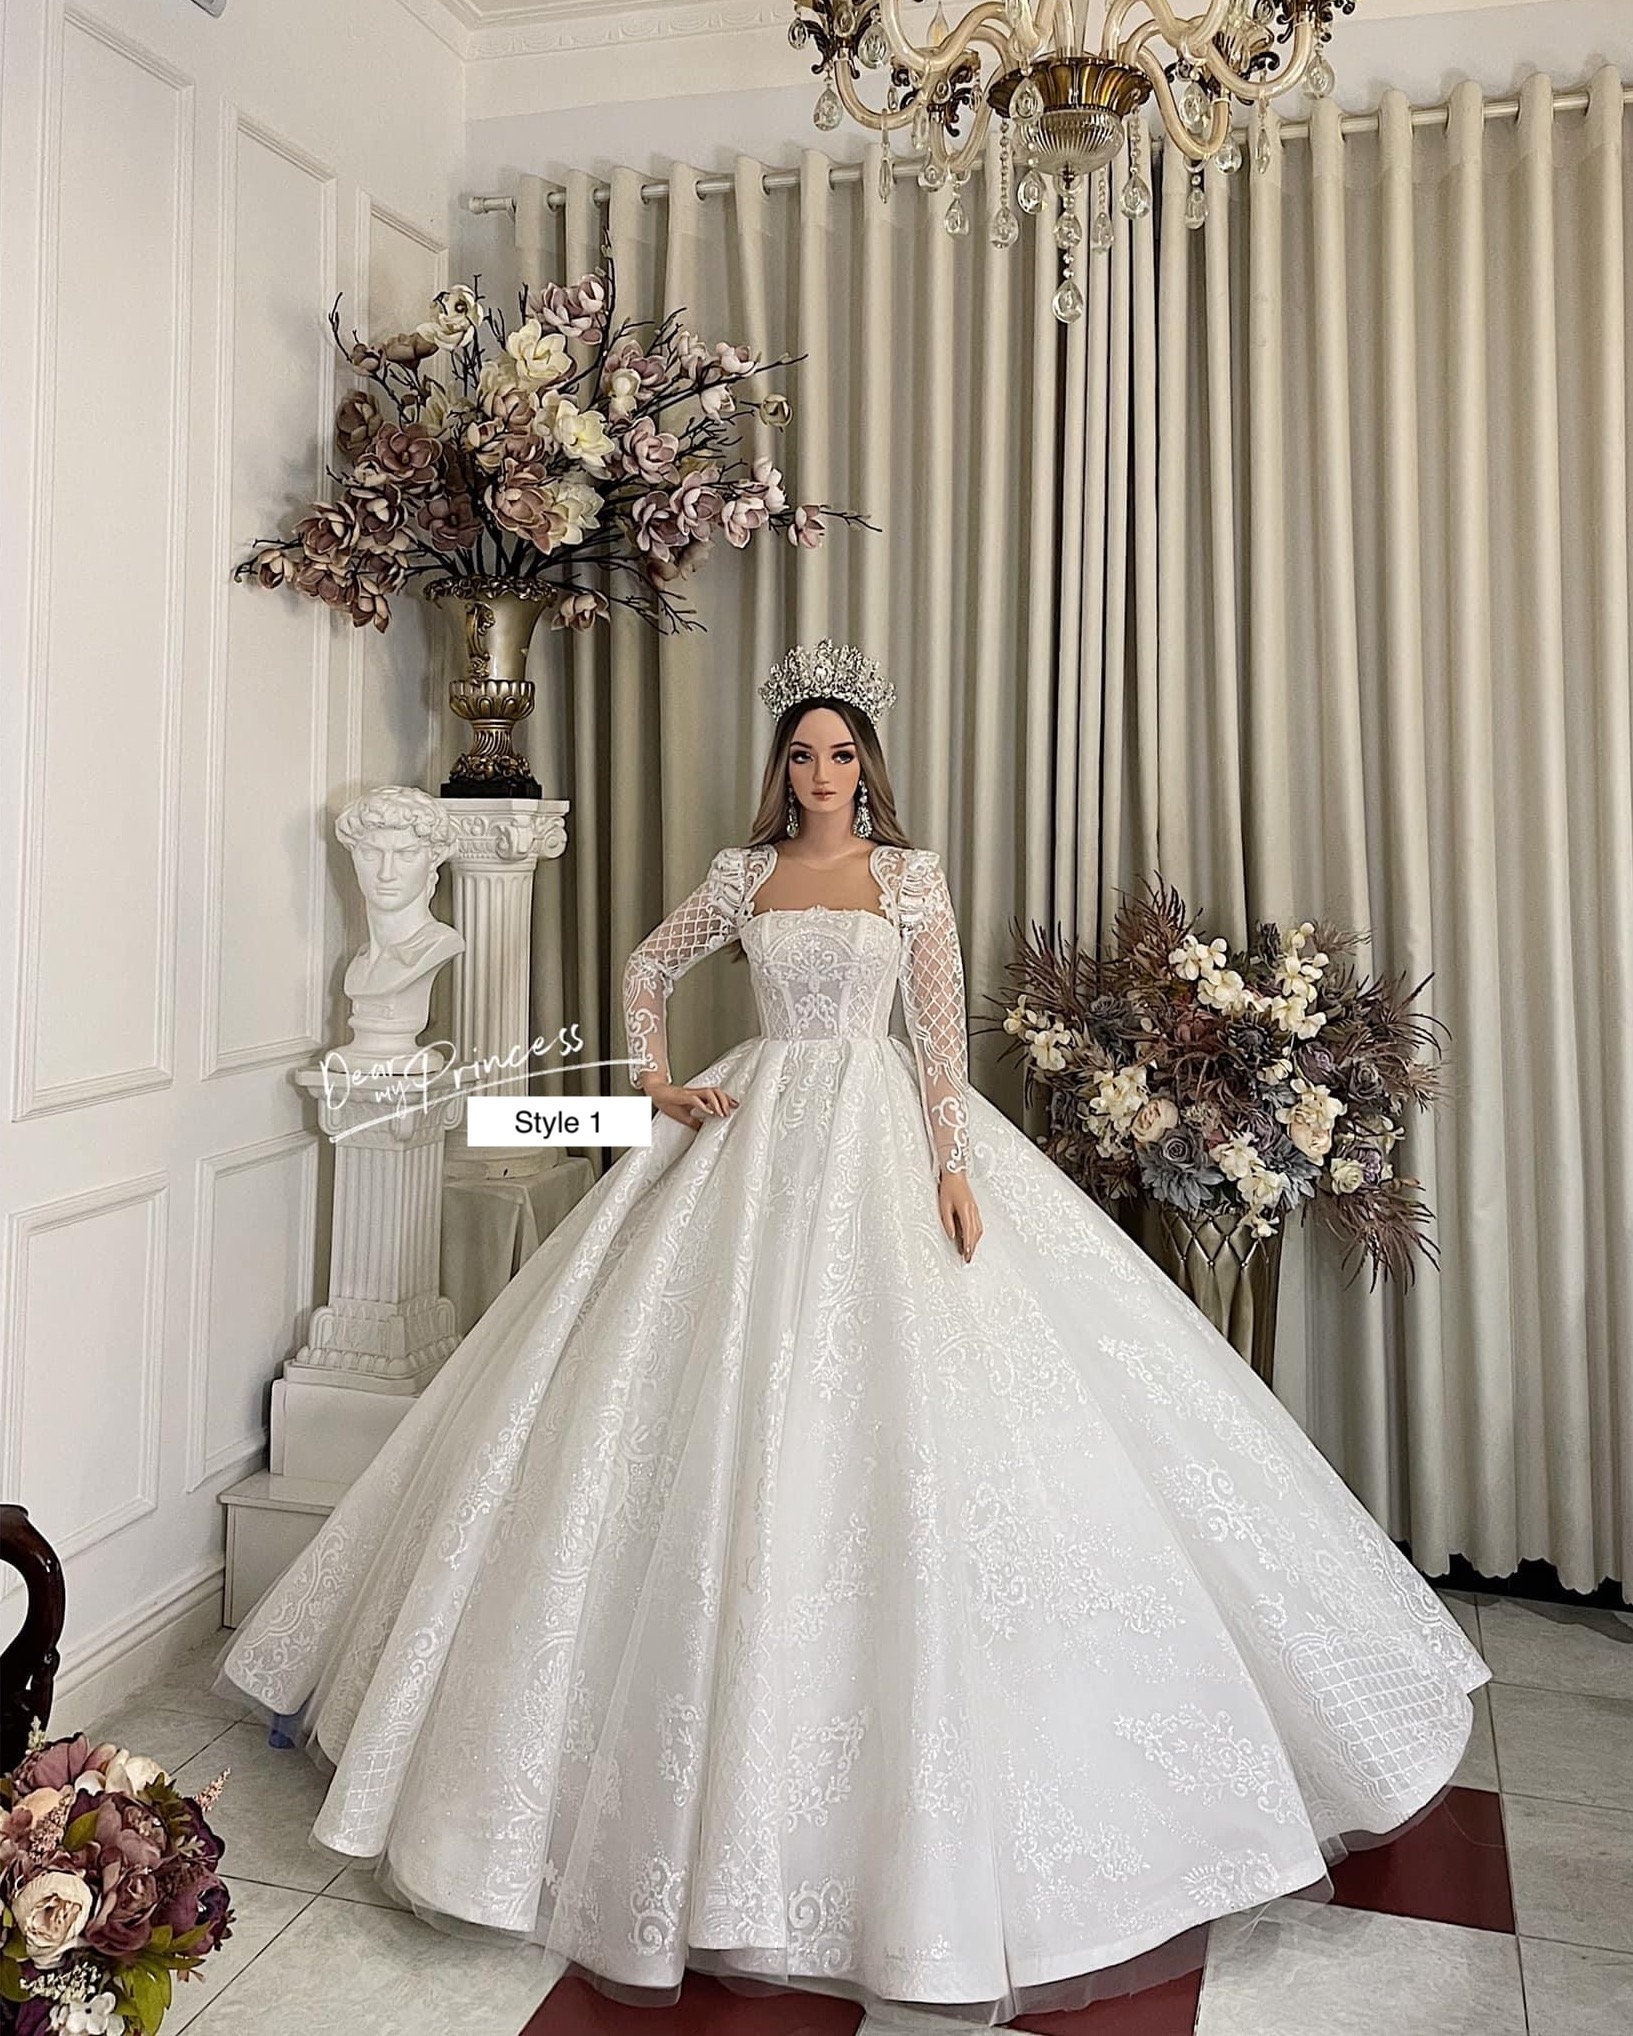 35 Swoon-worthy Purple Wedding Dress Designs We're Loving